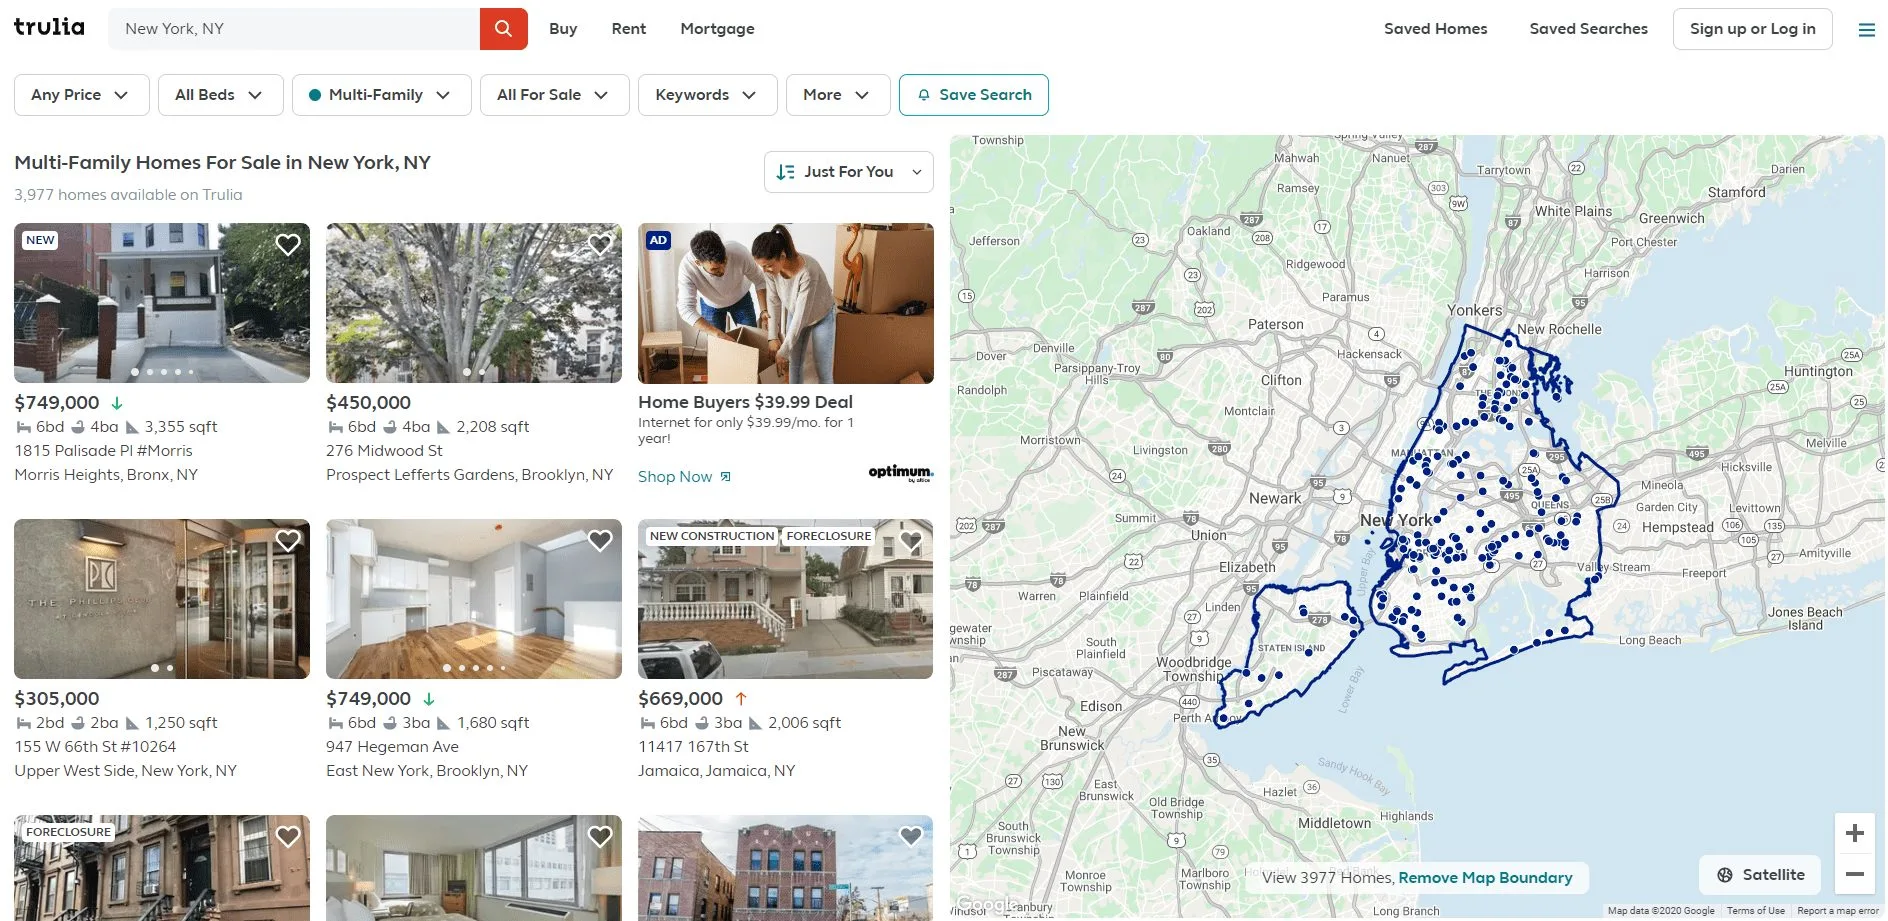 Screenshot of the Trulia.com platform showing New York apartment buildings for sale